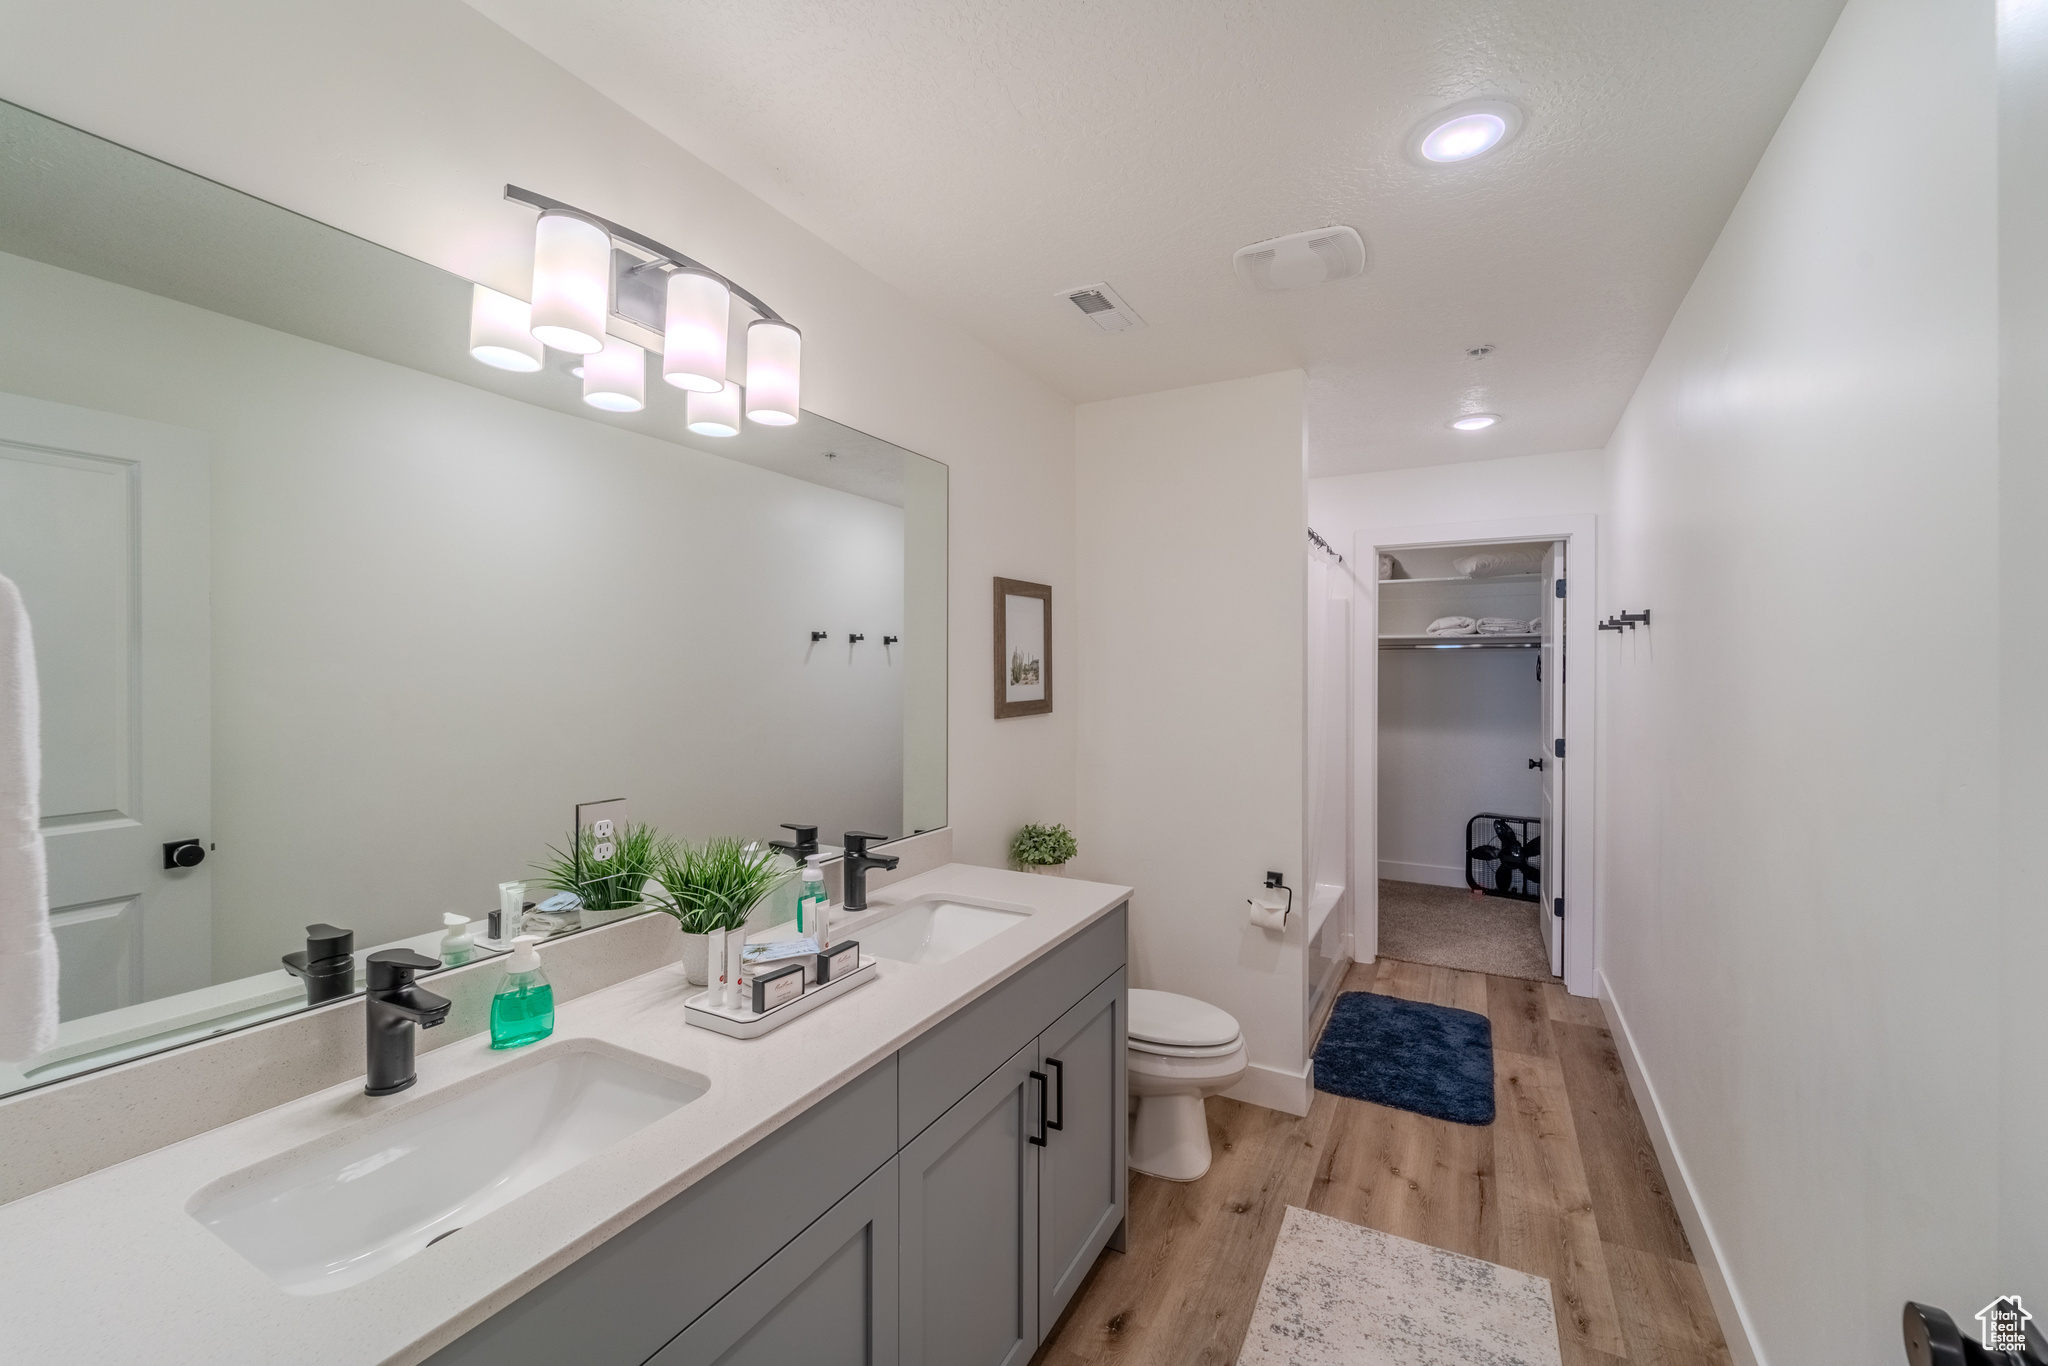 Bathroom with hardwood / wood-style floors, dual bowl vanity, and toilet